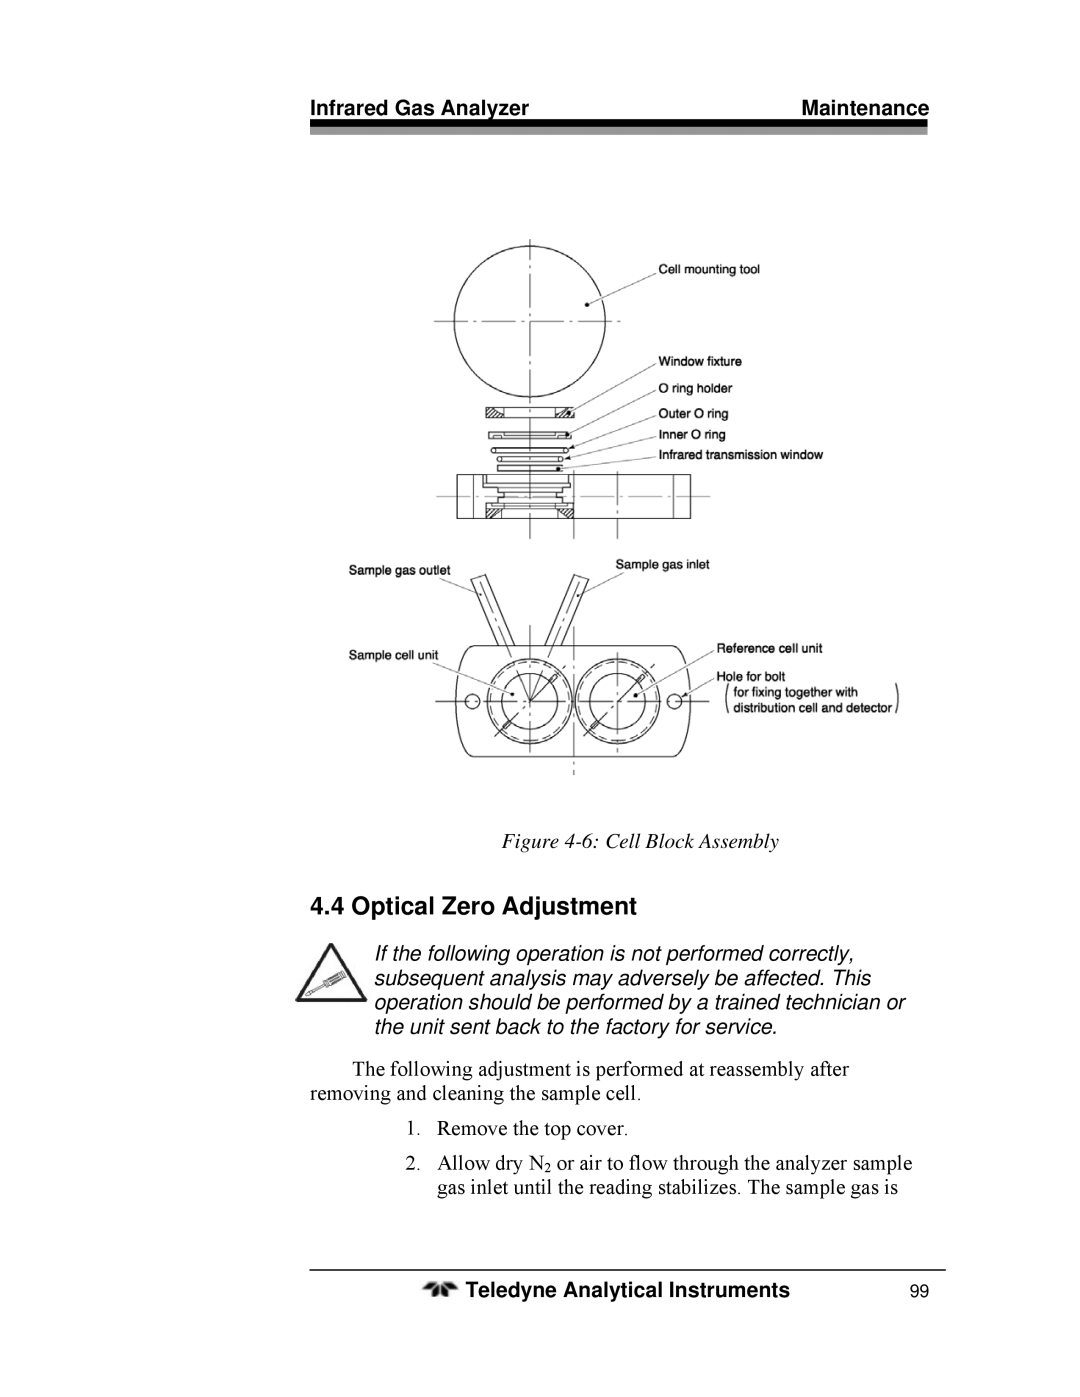 Teledyne 7600 operating instructions Optical Zero Adjustment, Cell Block Assembly 